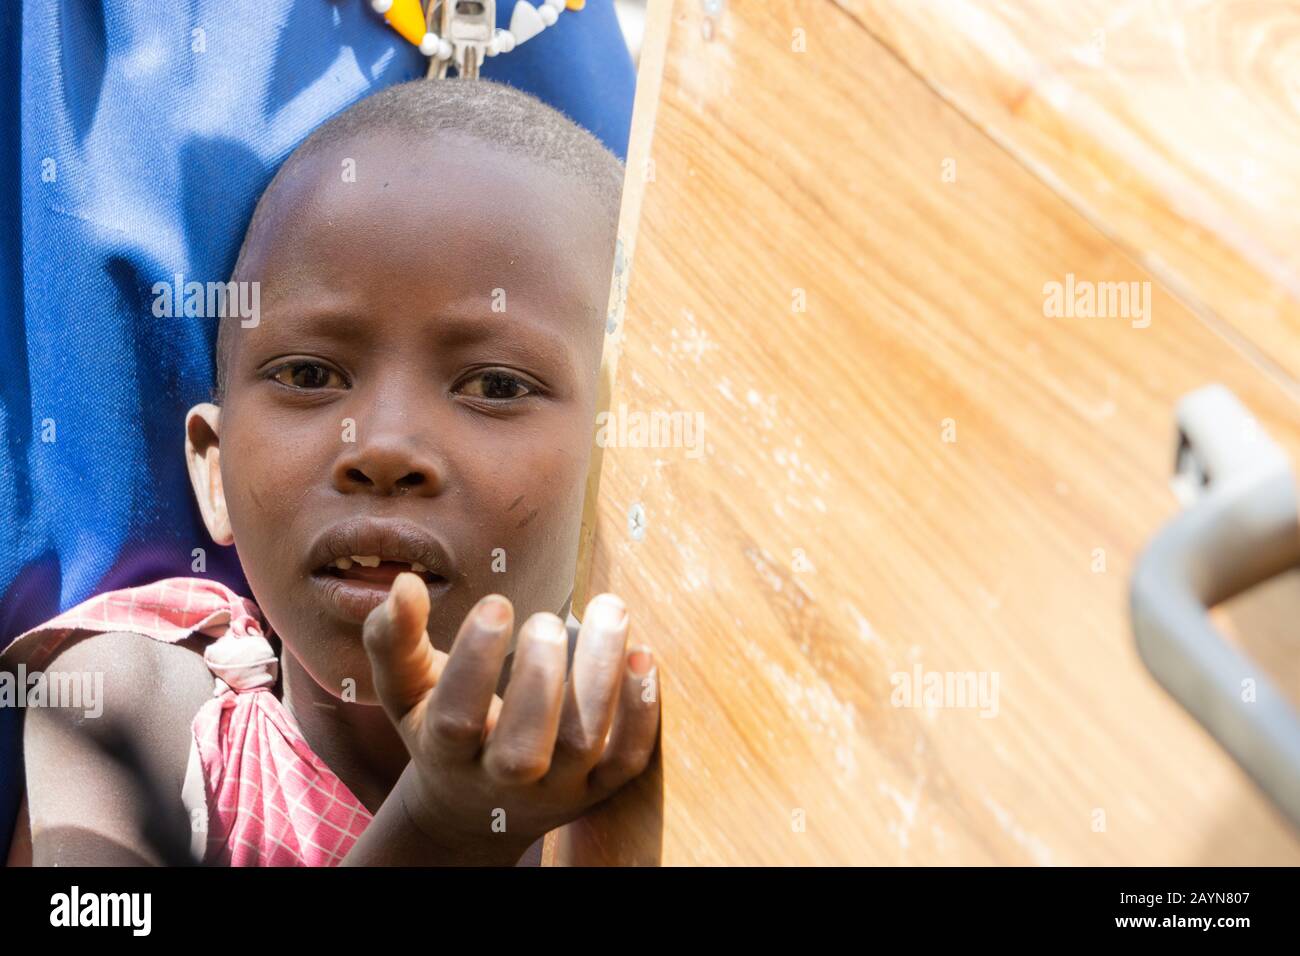 NGARE SERO. TANZANIA - AUGUST 20, 2019: child asks for something to eat at Ngare Sero area near Lake Natron and Ol Doinyo Lengai volcano in Tanzania Stock Photo